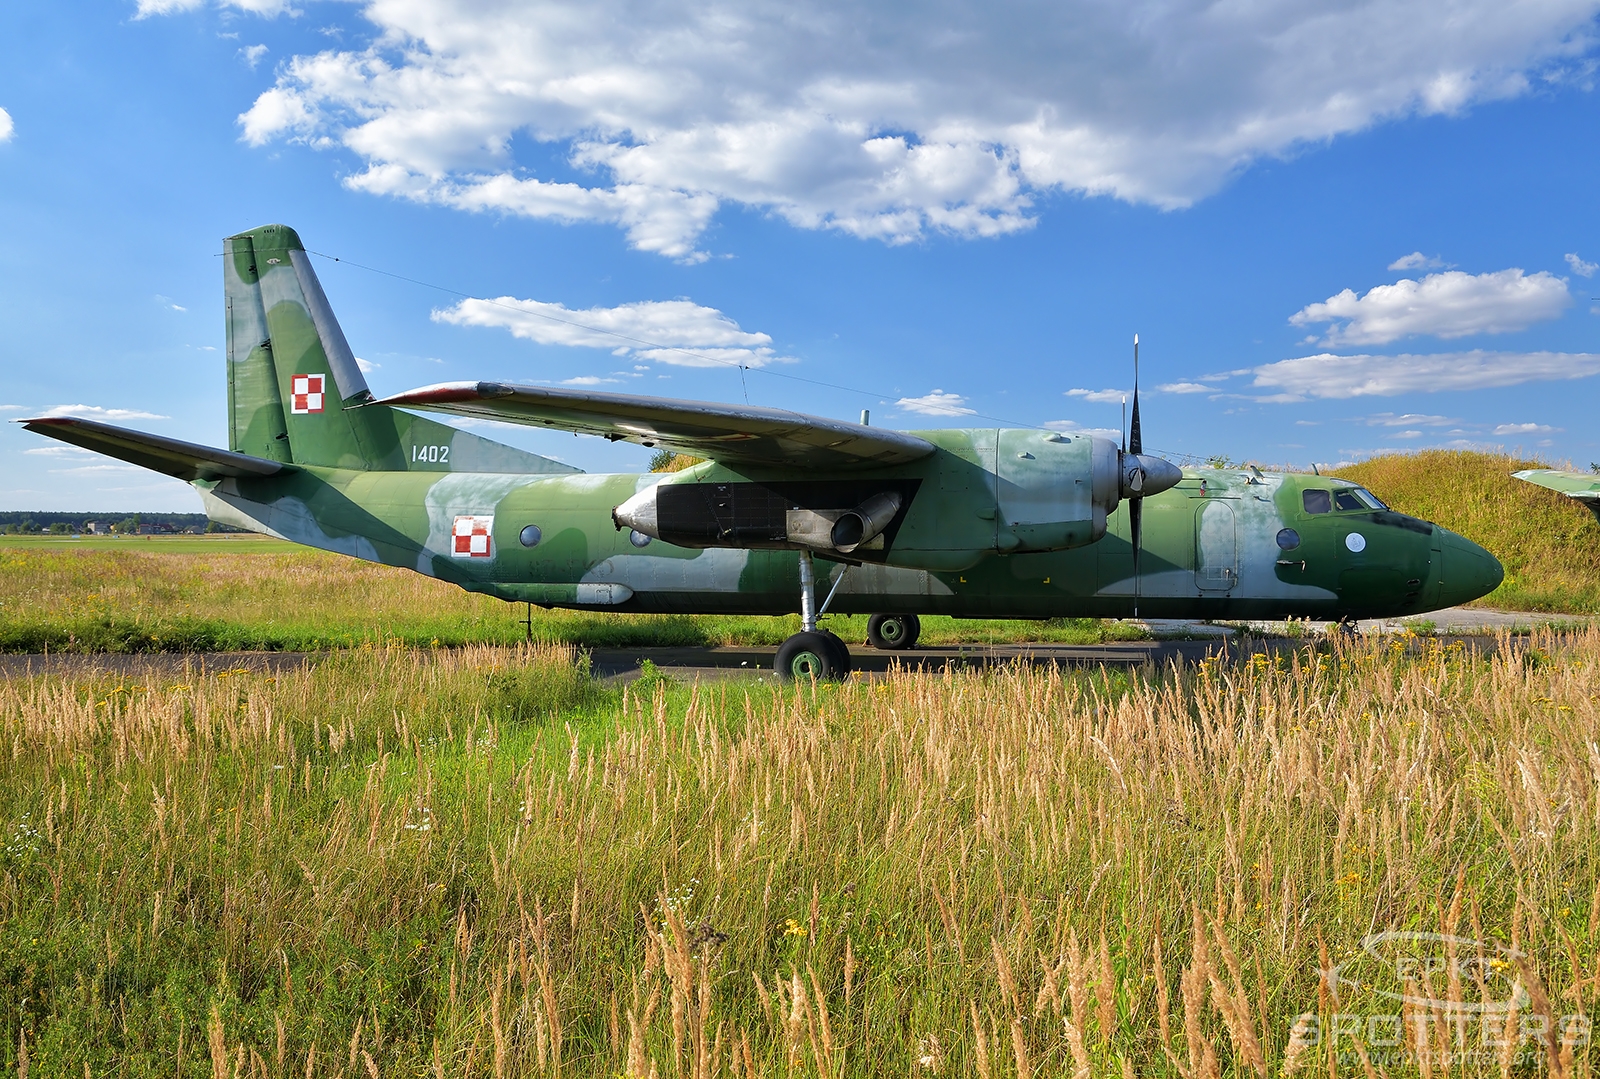 SP-EKD - Antonov An-26  (Exin) / Pyrzowice - Katowice Poland [EPKT/KTW]